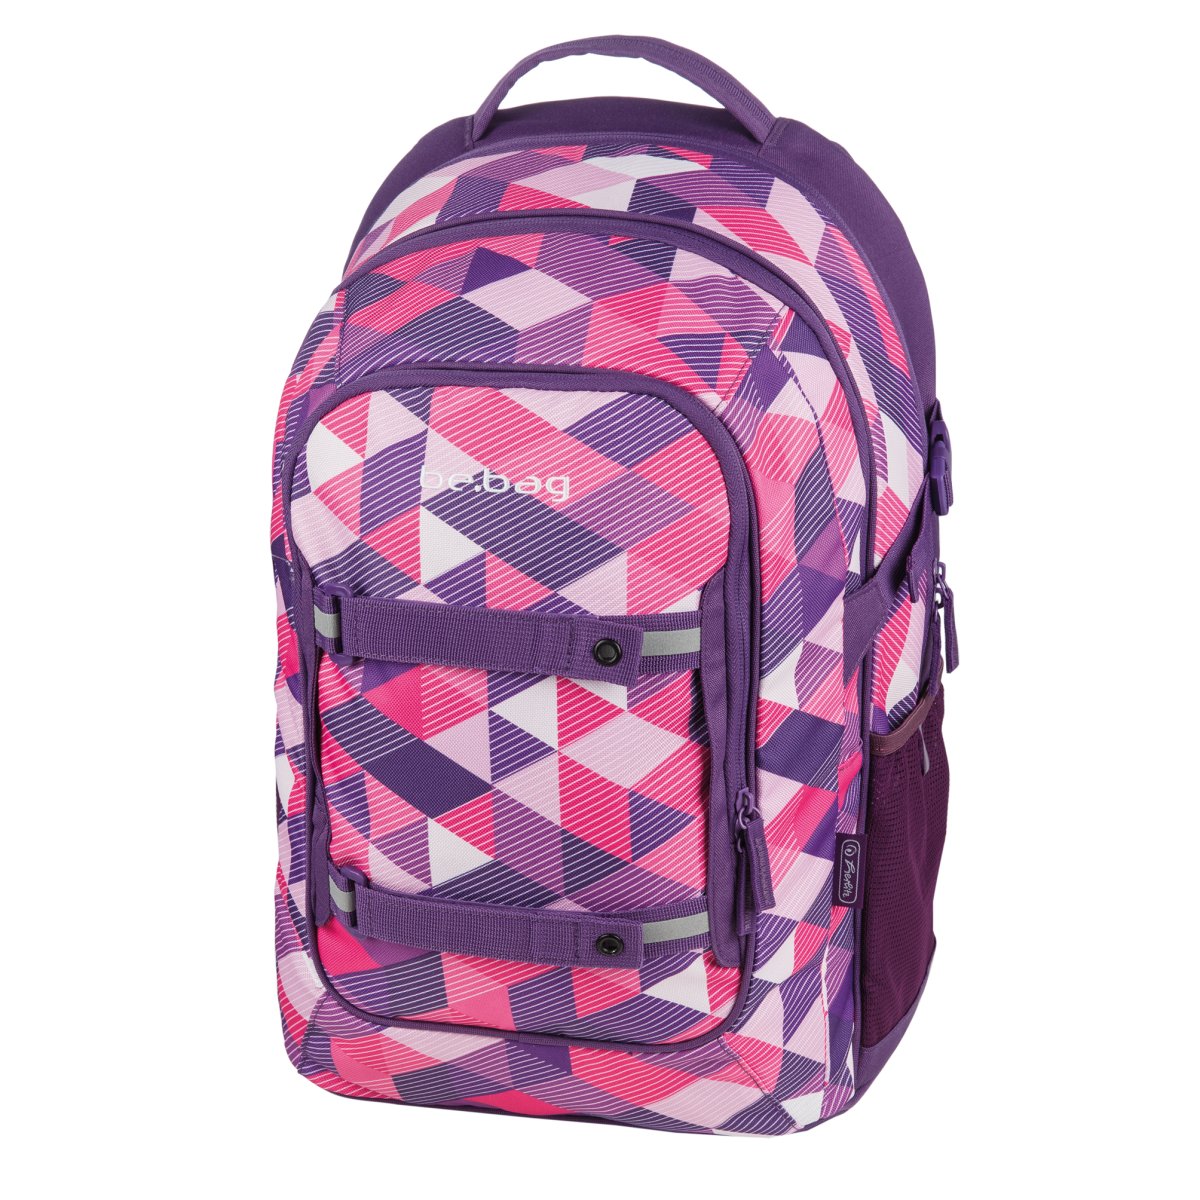 school beat Herlitz Checked Purple be.bag backpack -